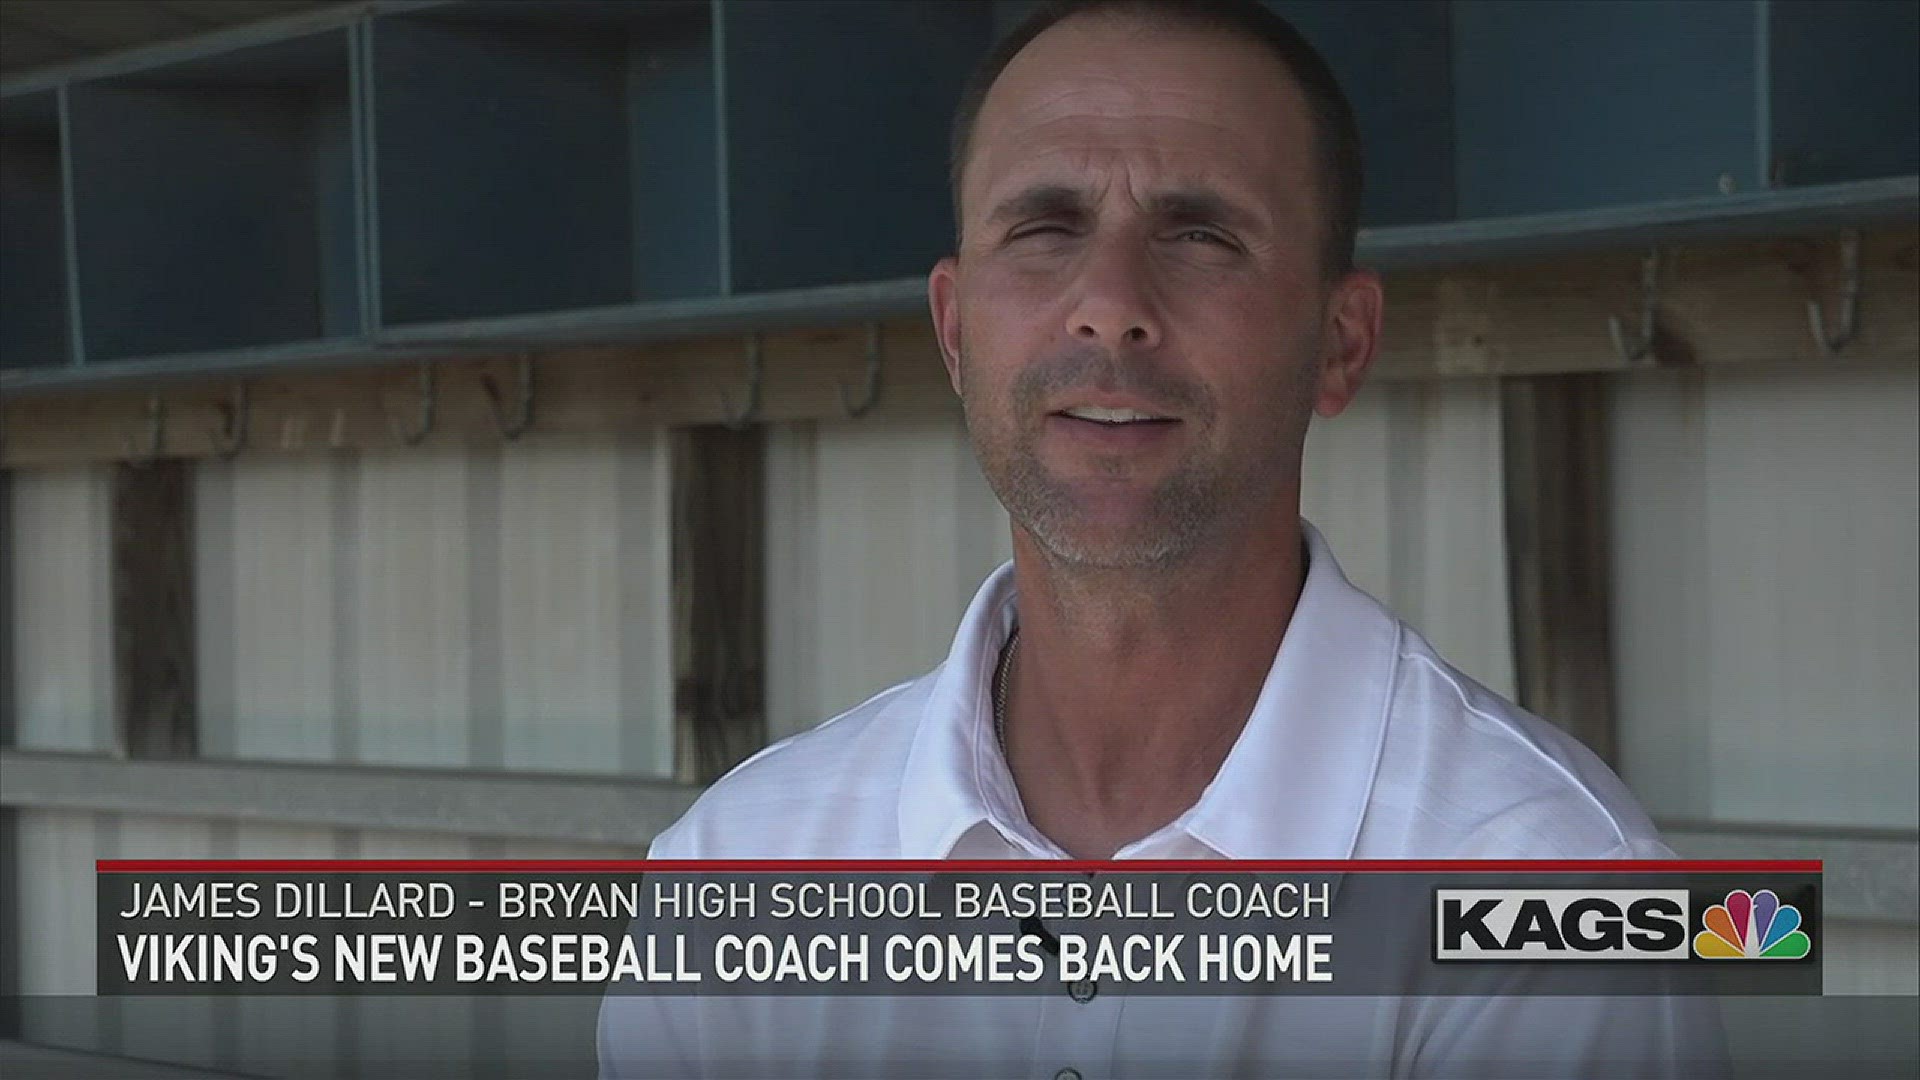 James Dillard has returned to Bryan to be the baseball coach.